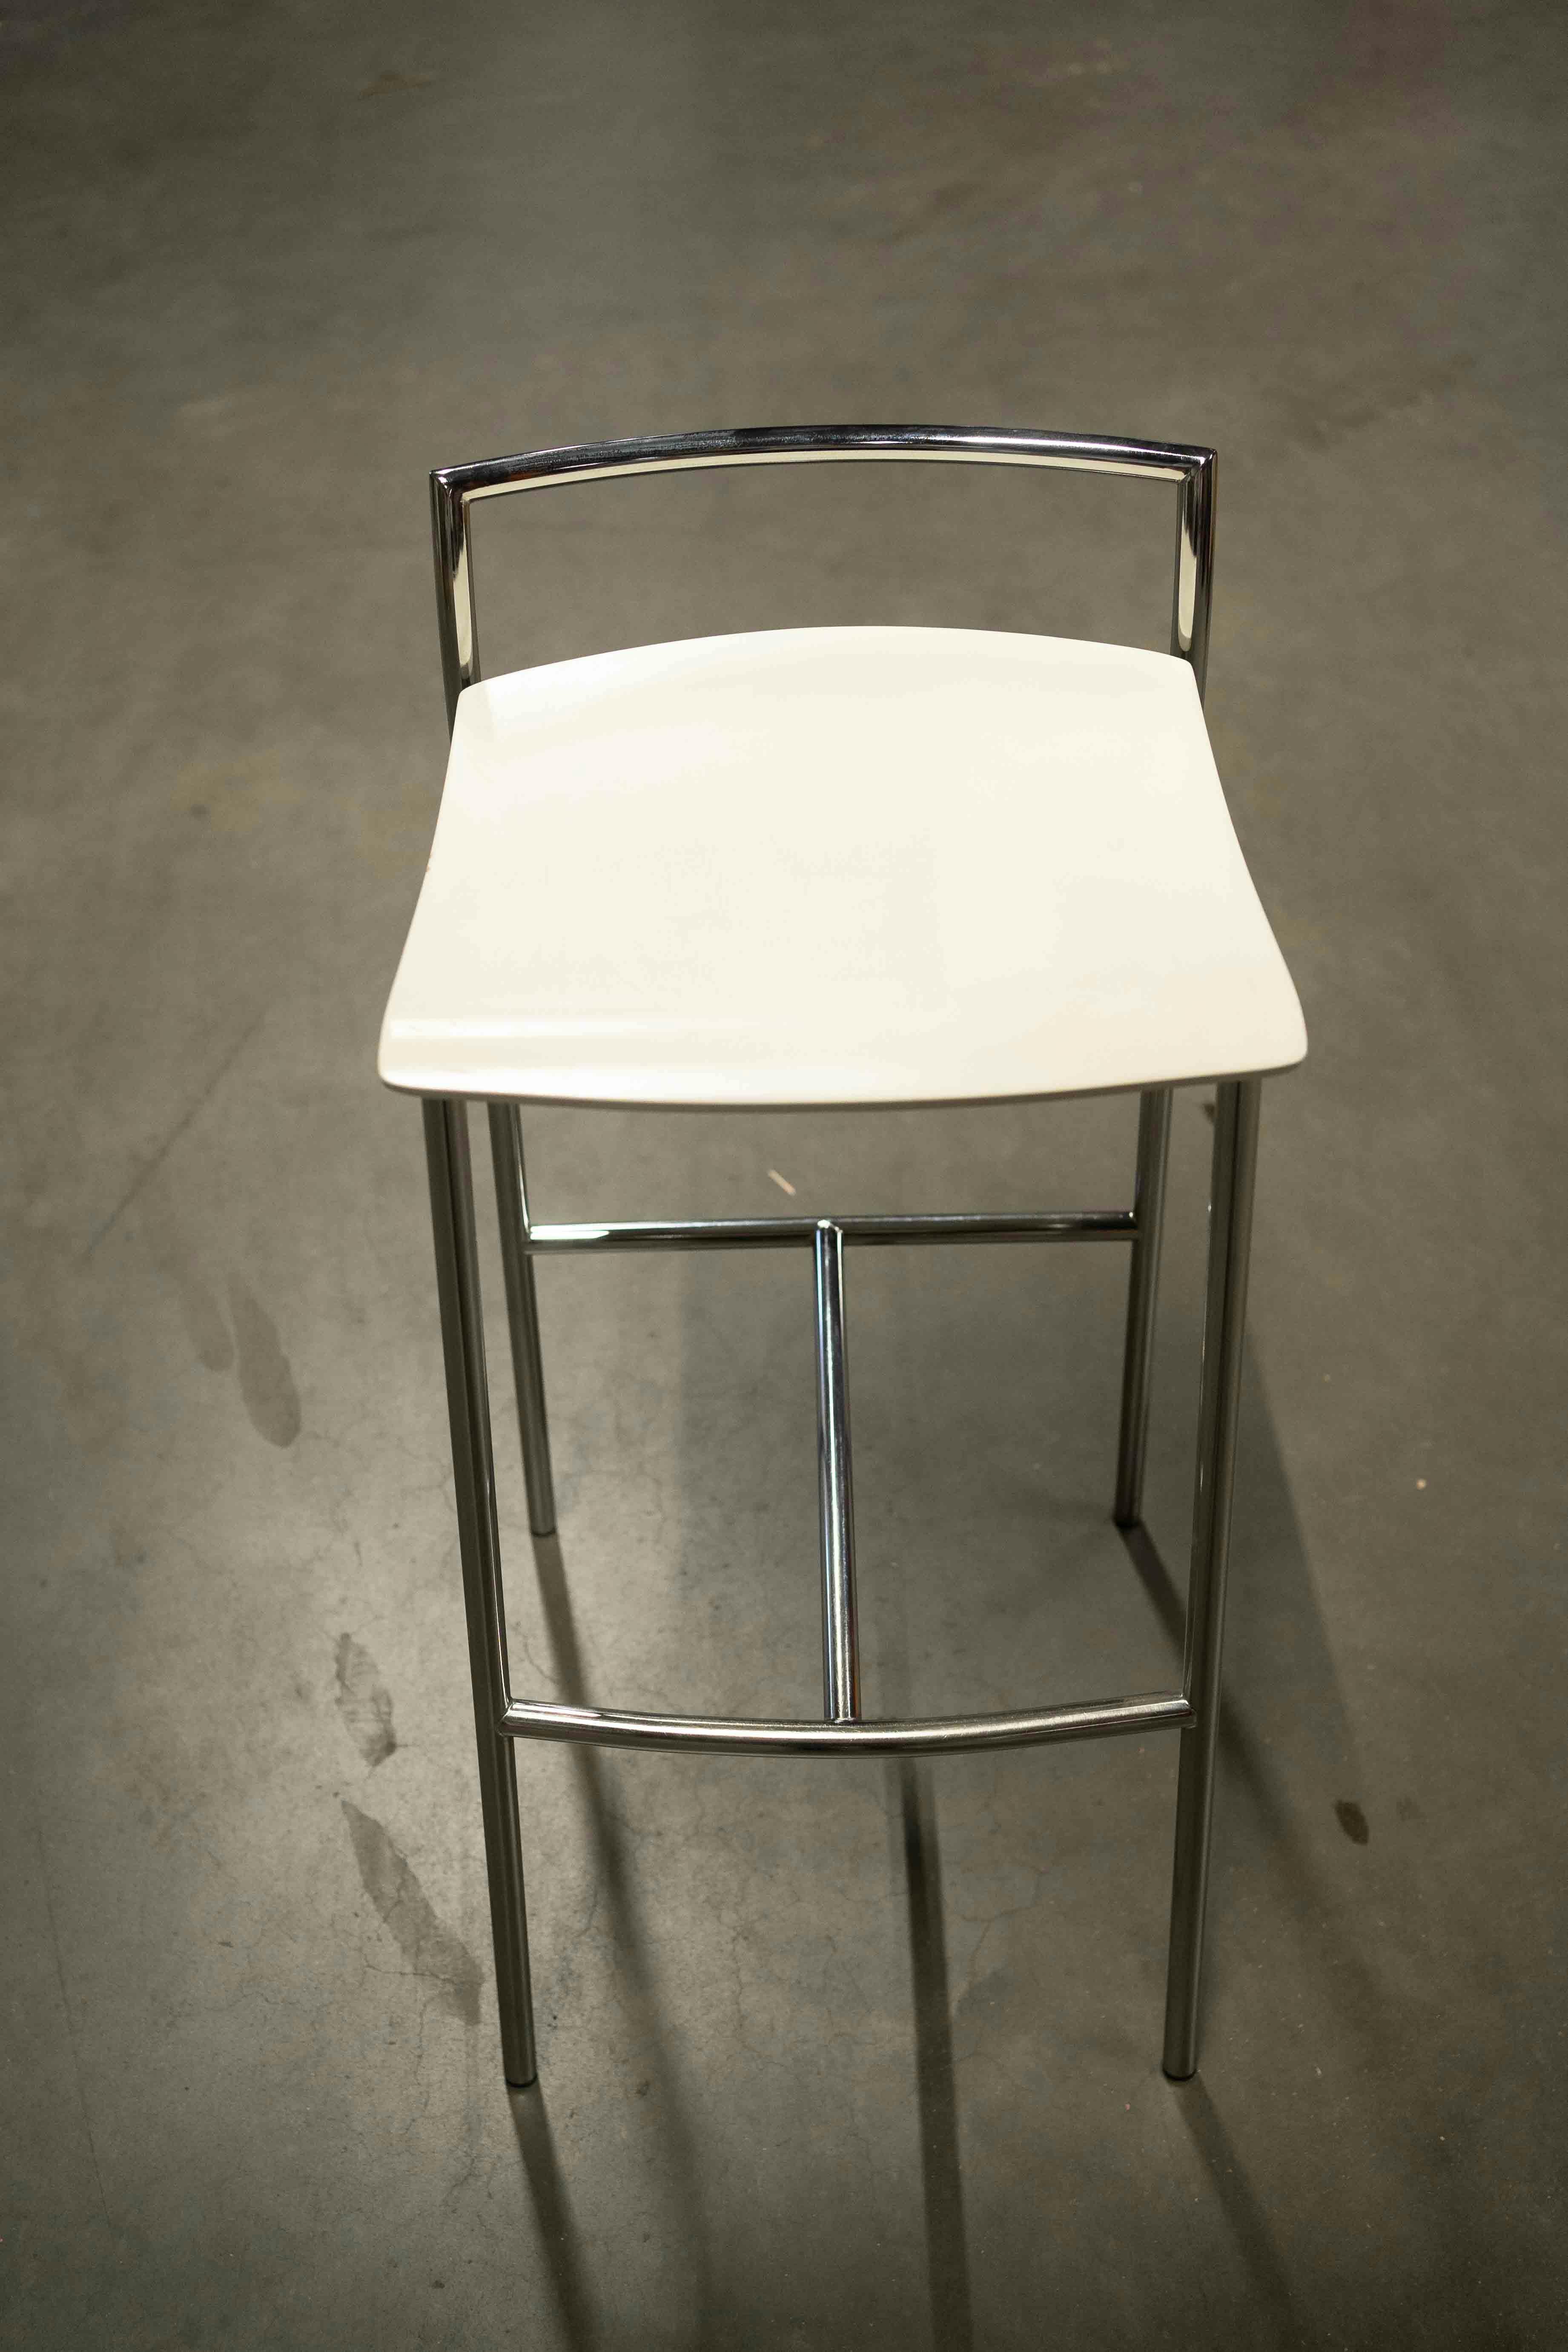 BEFI2500:Stools - Relieve Furniture